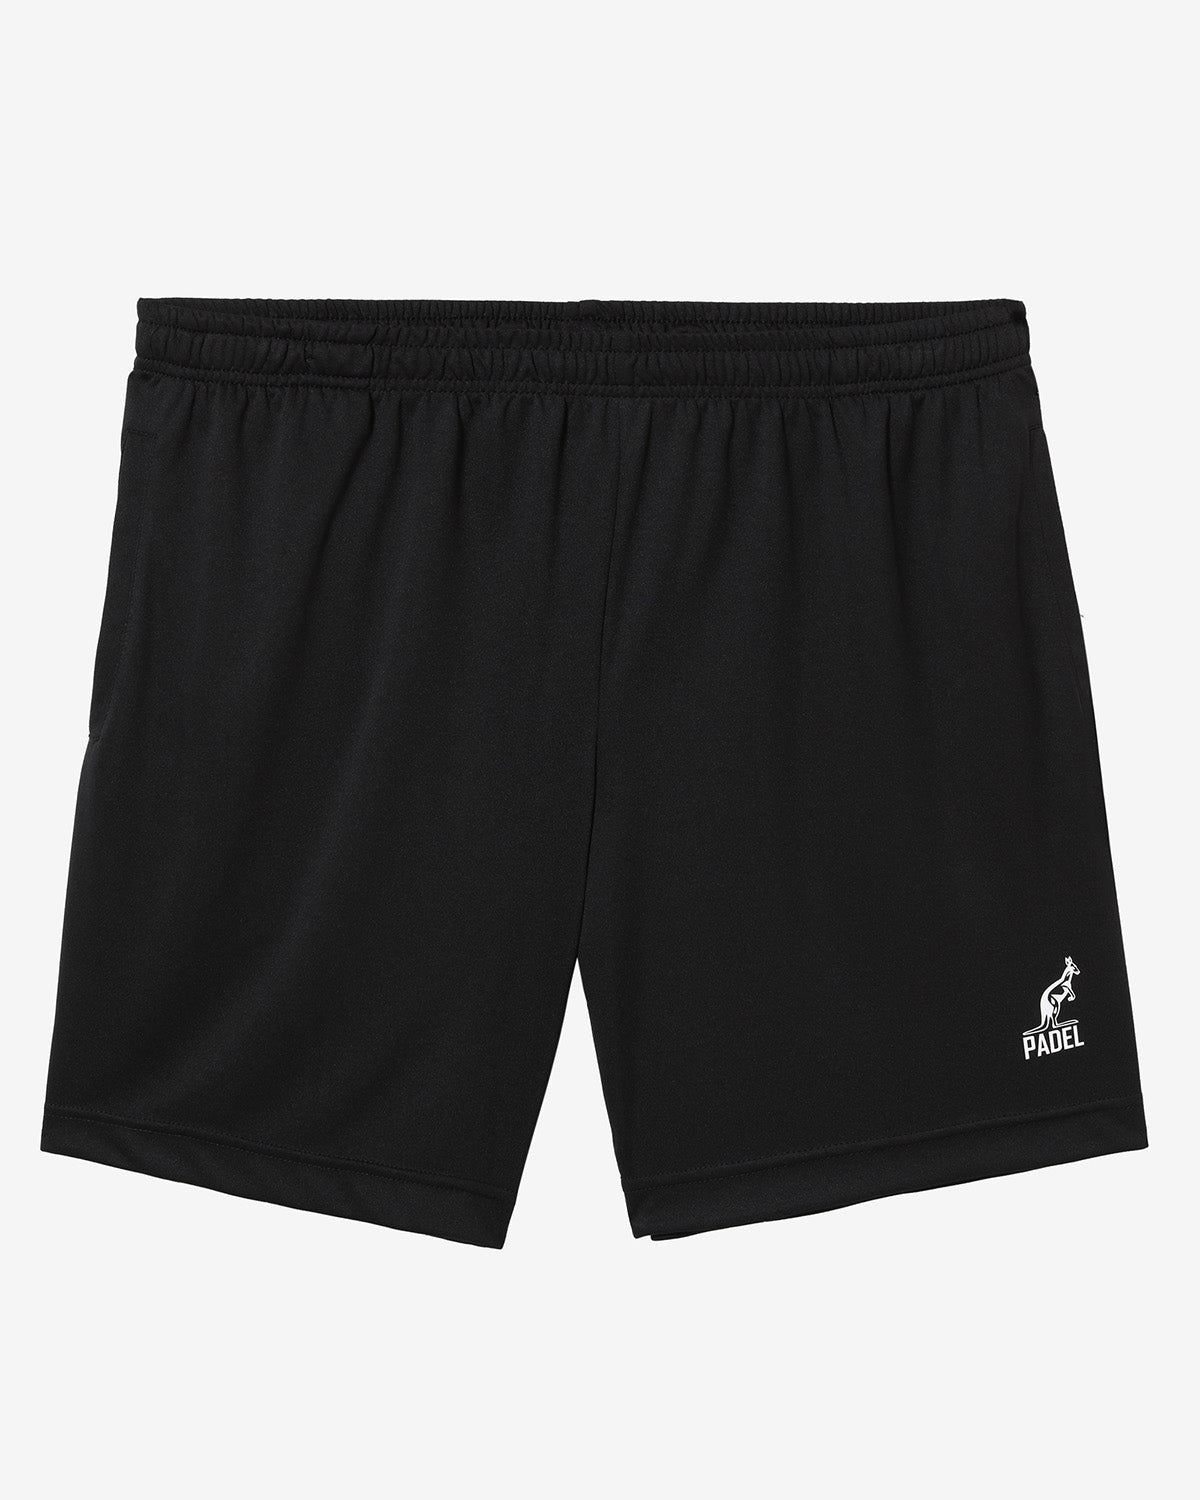 Basic Padel Shorts: Australian Padel